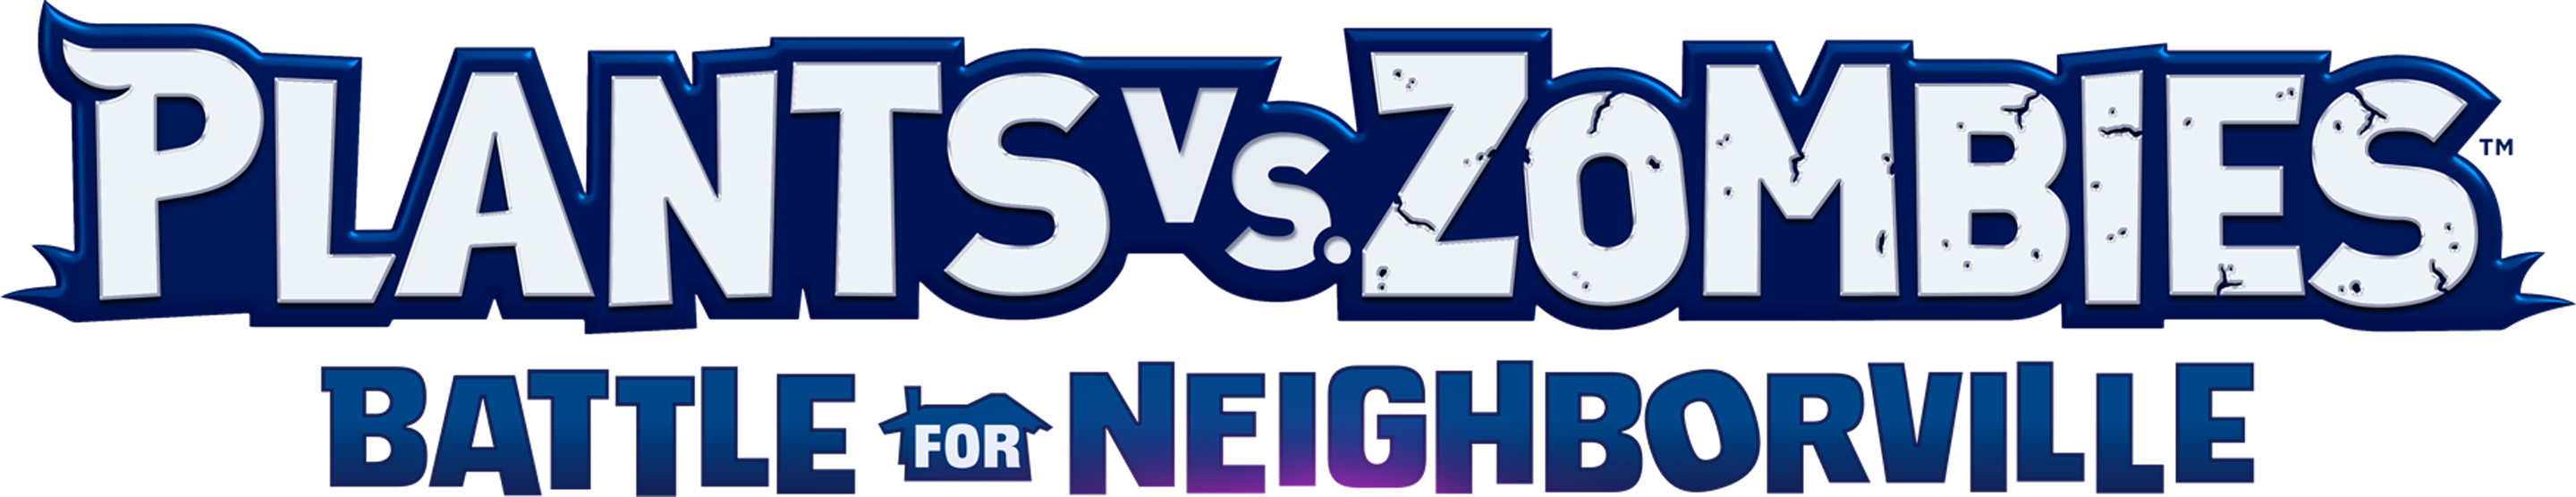 Sony Plants Vs Zombies Battle for Neighborville - PS4 - Macy's